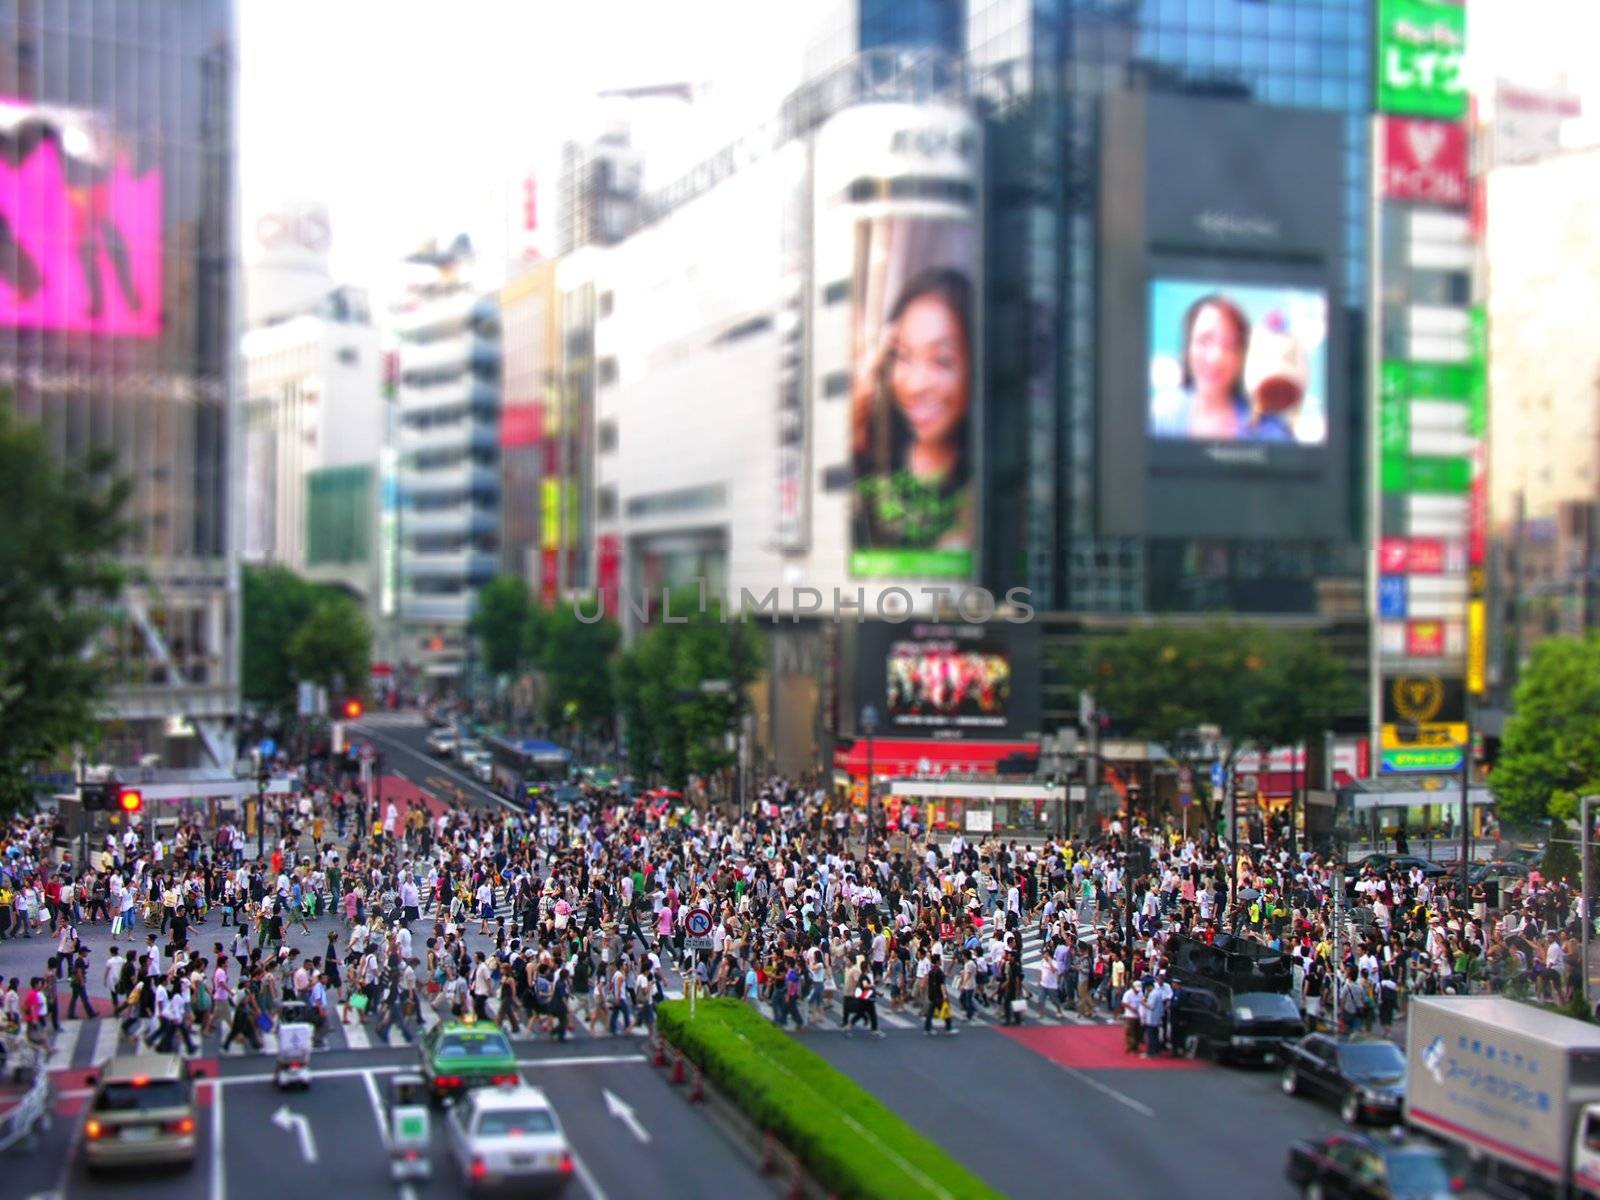 Tokyo pedestrian crossing by rigamondis